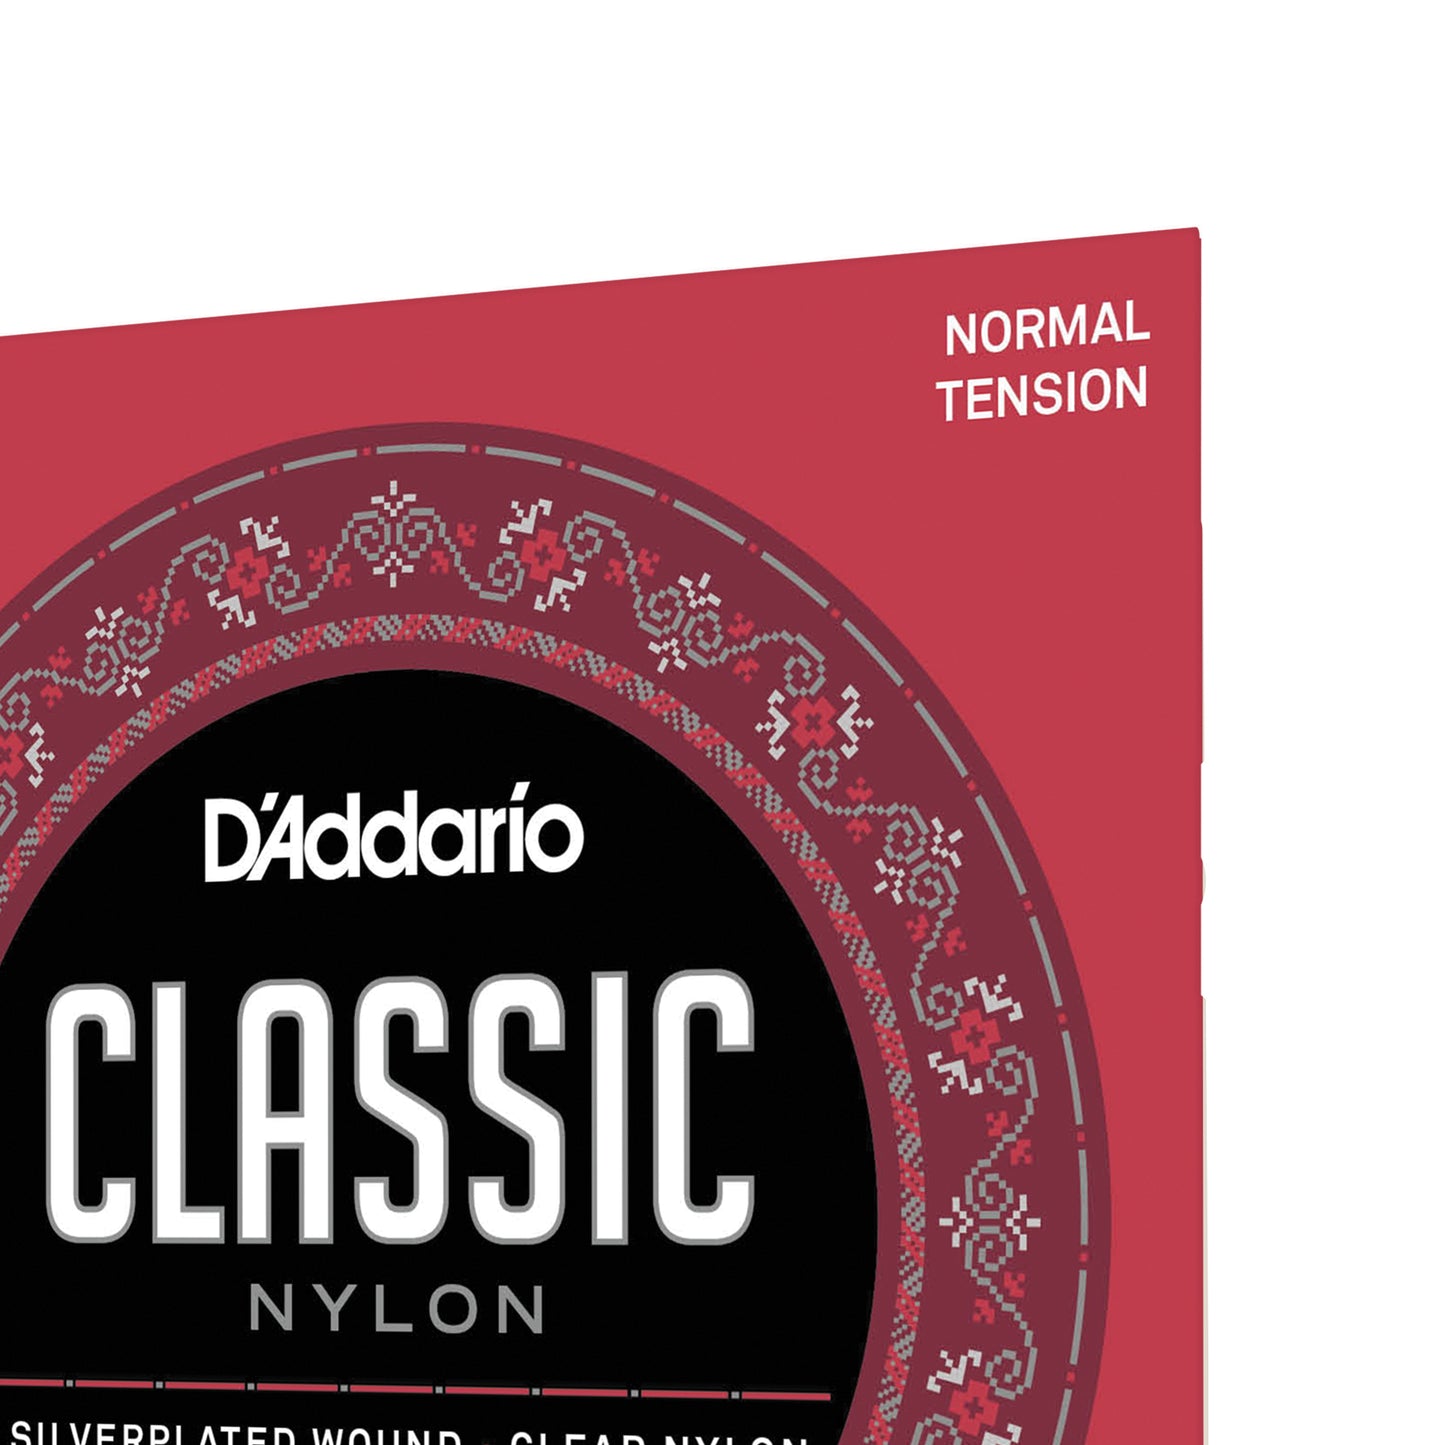 D'Addario Student Classical Nylon Strings (Normal Tension)